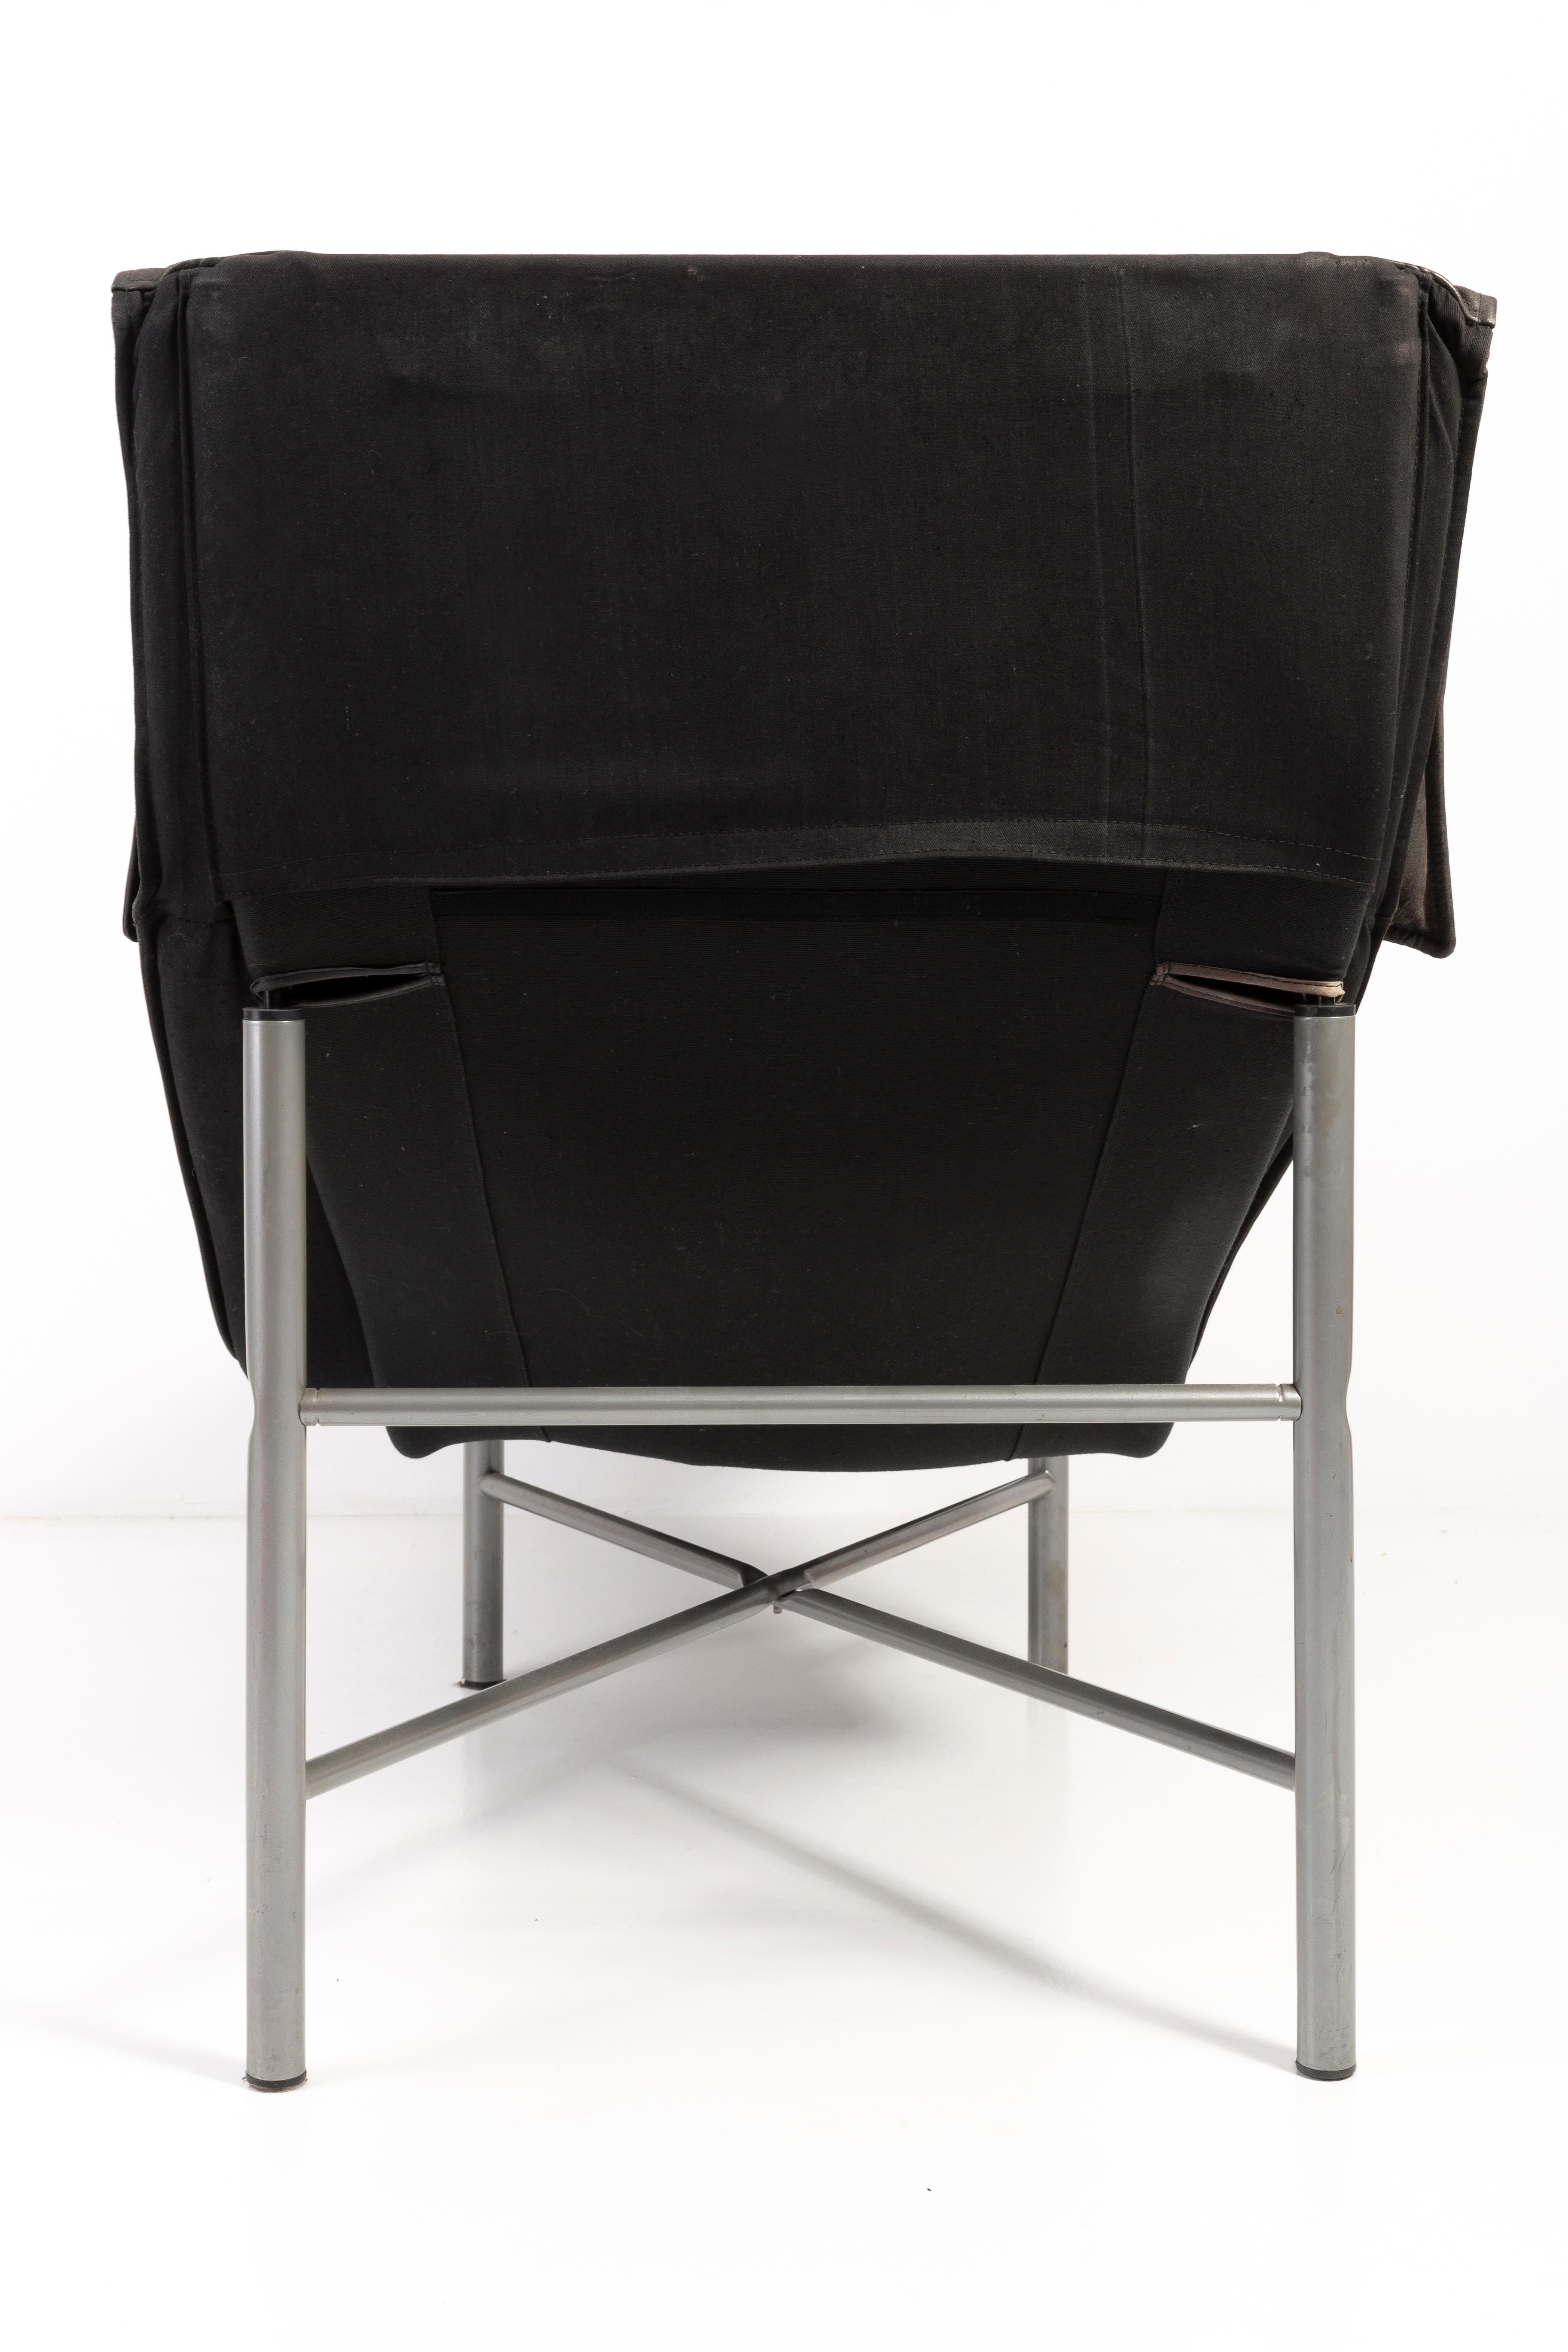 Midcentury Danish Modern Black Leather Chaise Lounge Chair by Tord Björklund 3